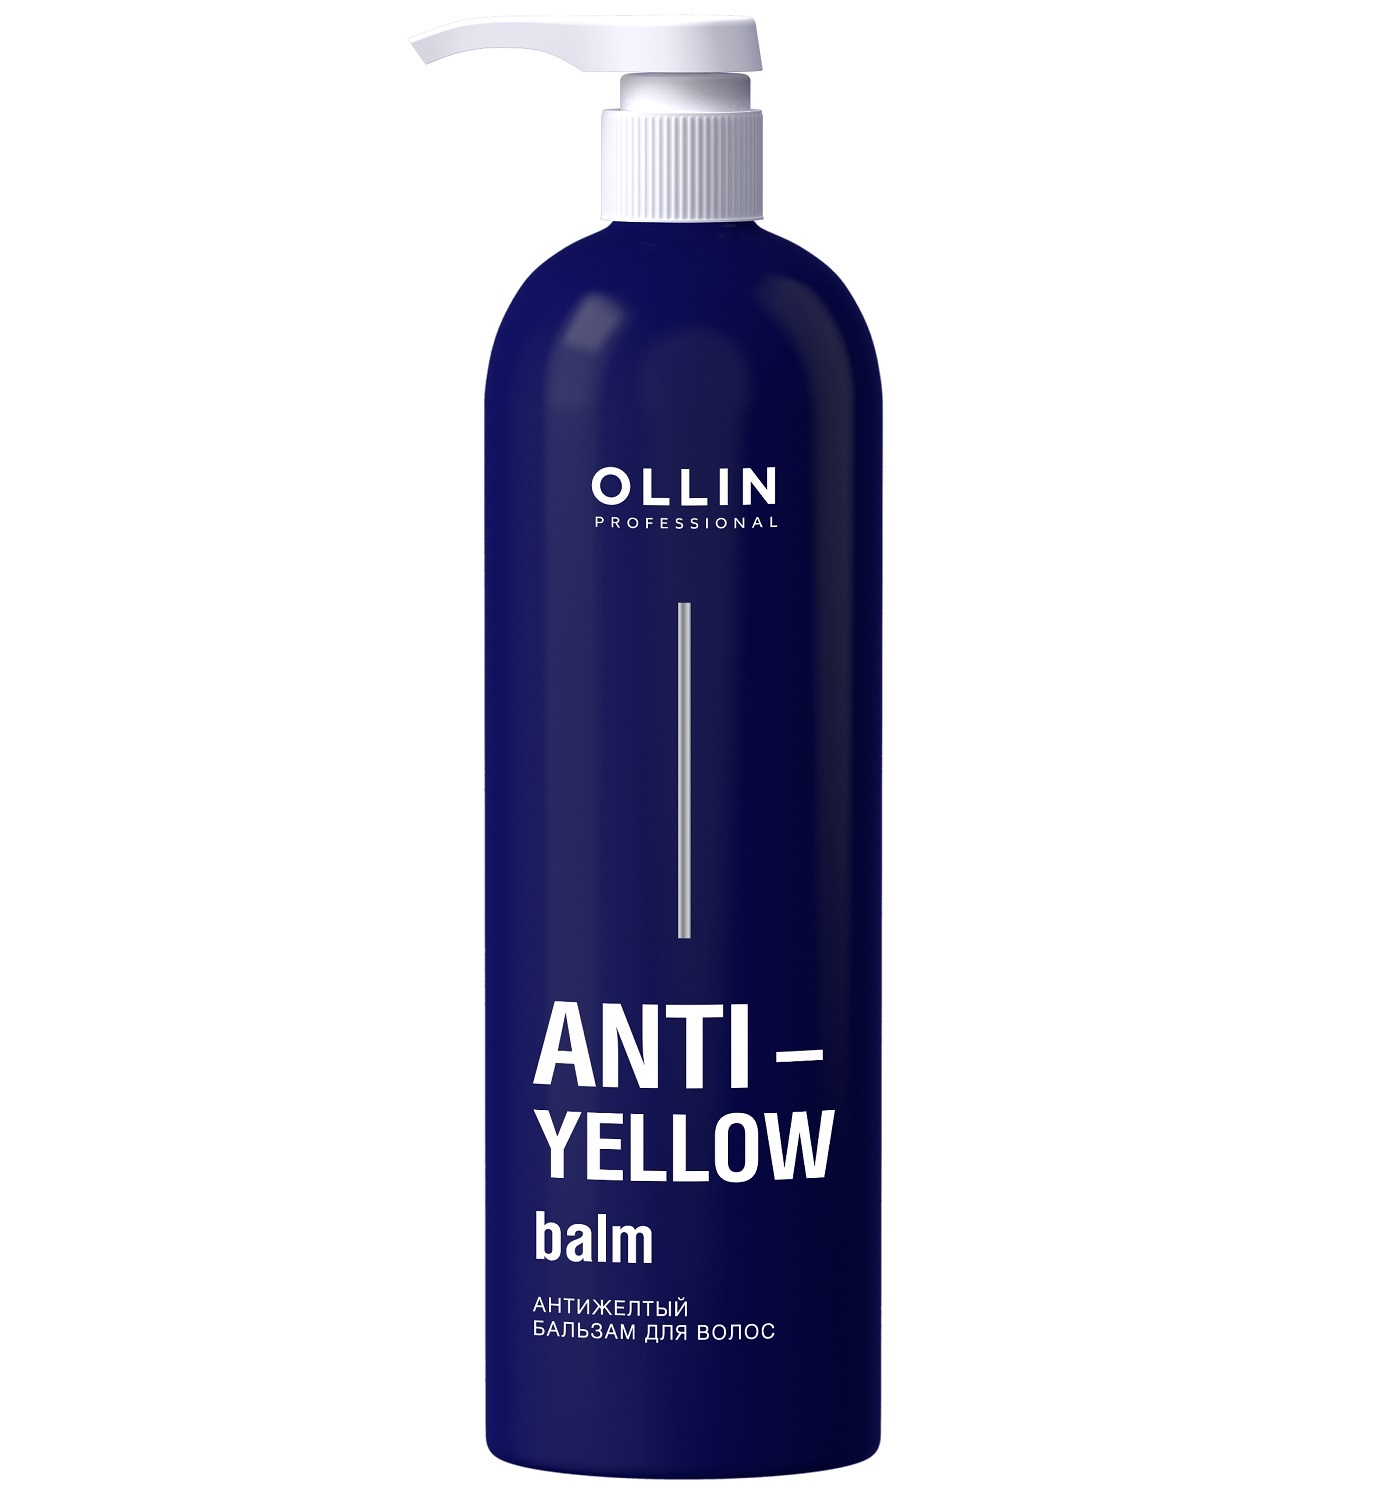 Ollin Professional Антижелтый бальзам для волос Anti-Yellow Balm, 500 мл (Ollin Professional, Anti-Yellow)